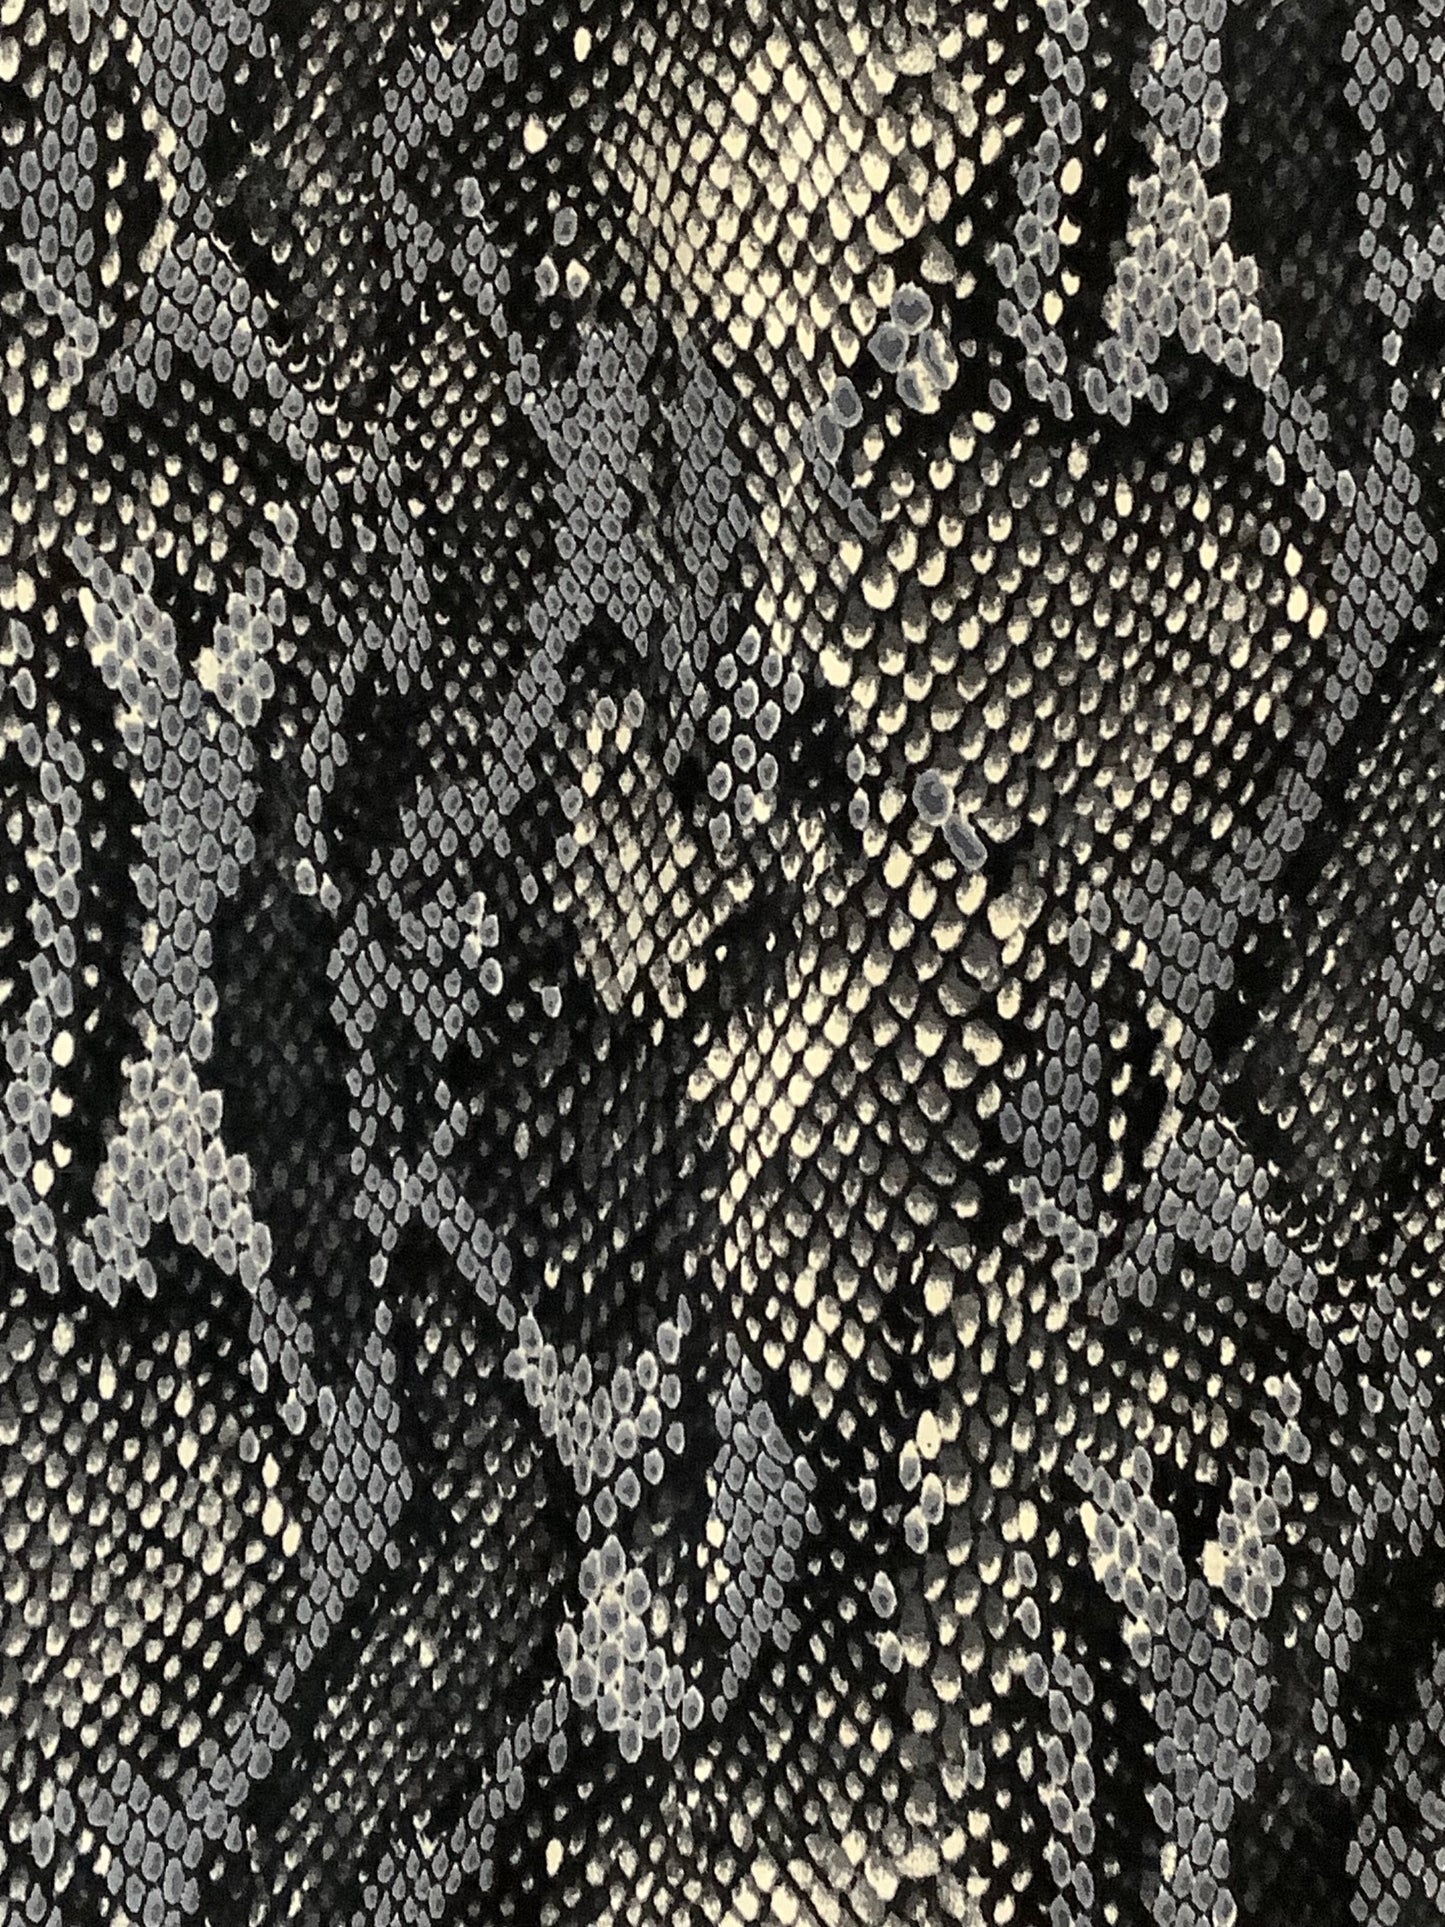 Snakeskin Print Jumpsuit Express, Size S